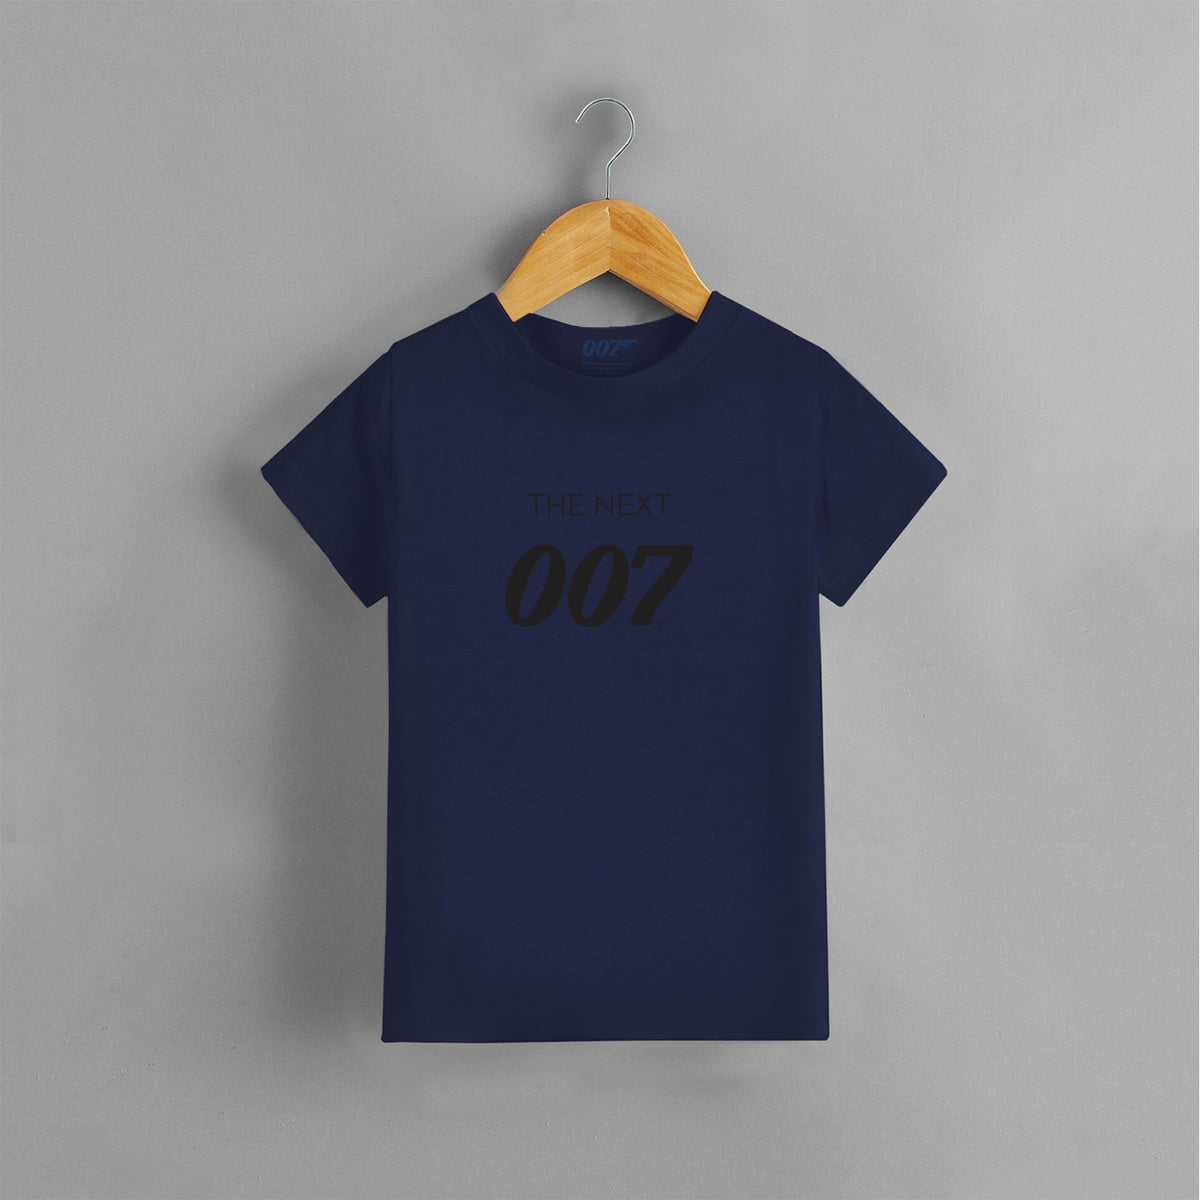 James Bond T-Shirt für Kinder/Teenager „The Next 007“ (7 Farben)